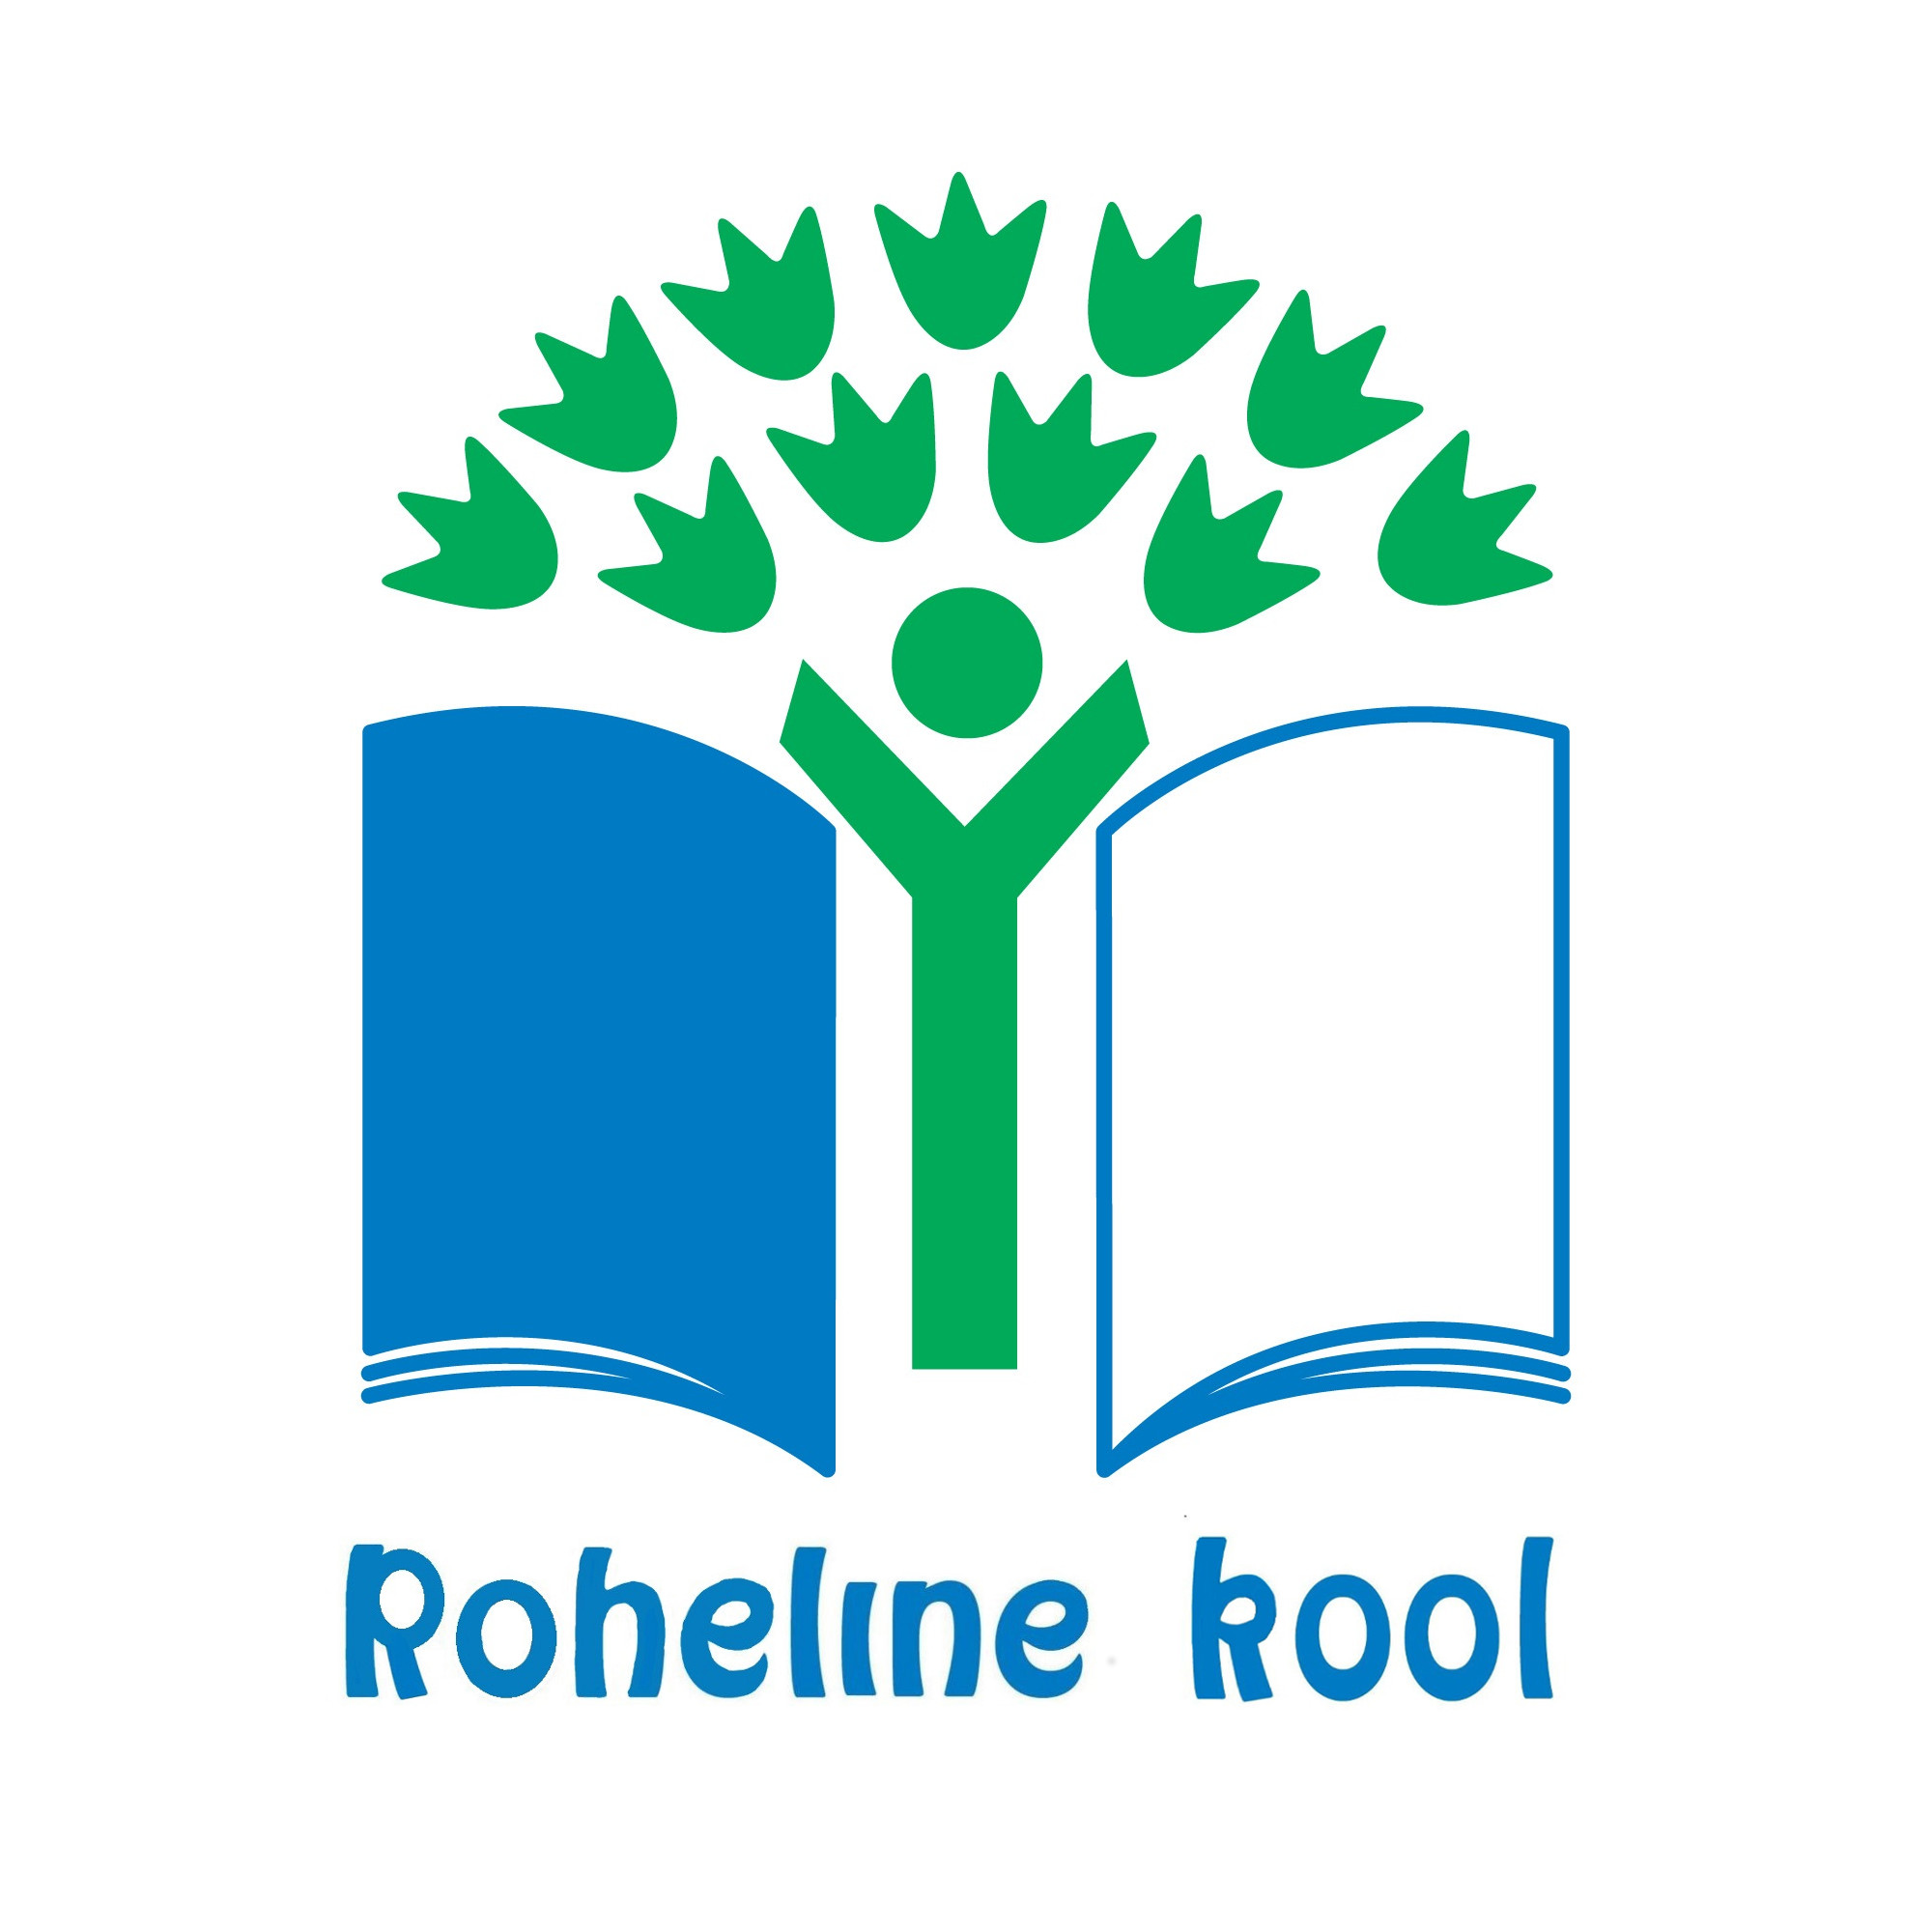 Roheline_kool_logo